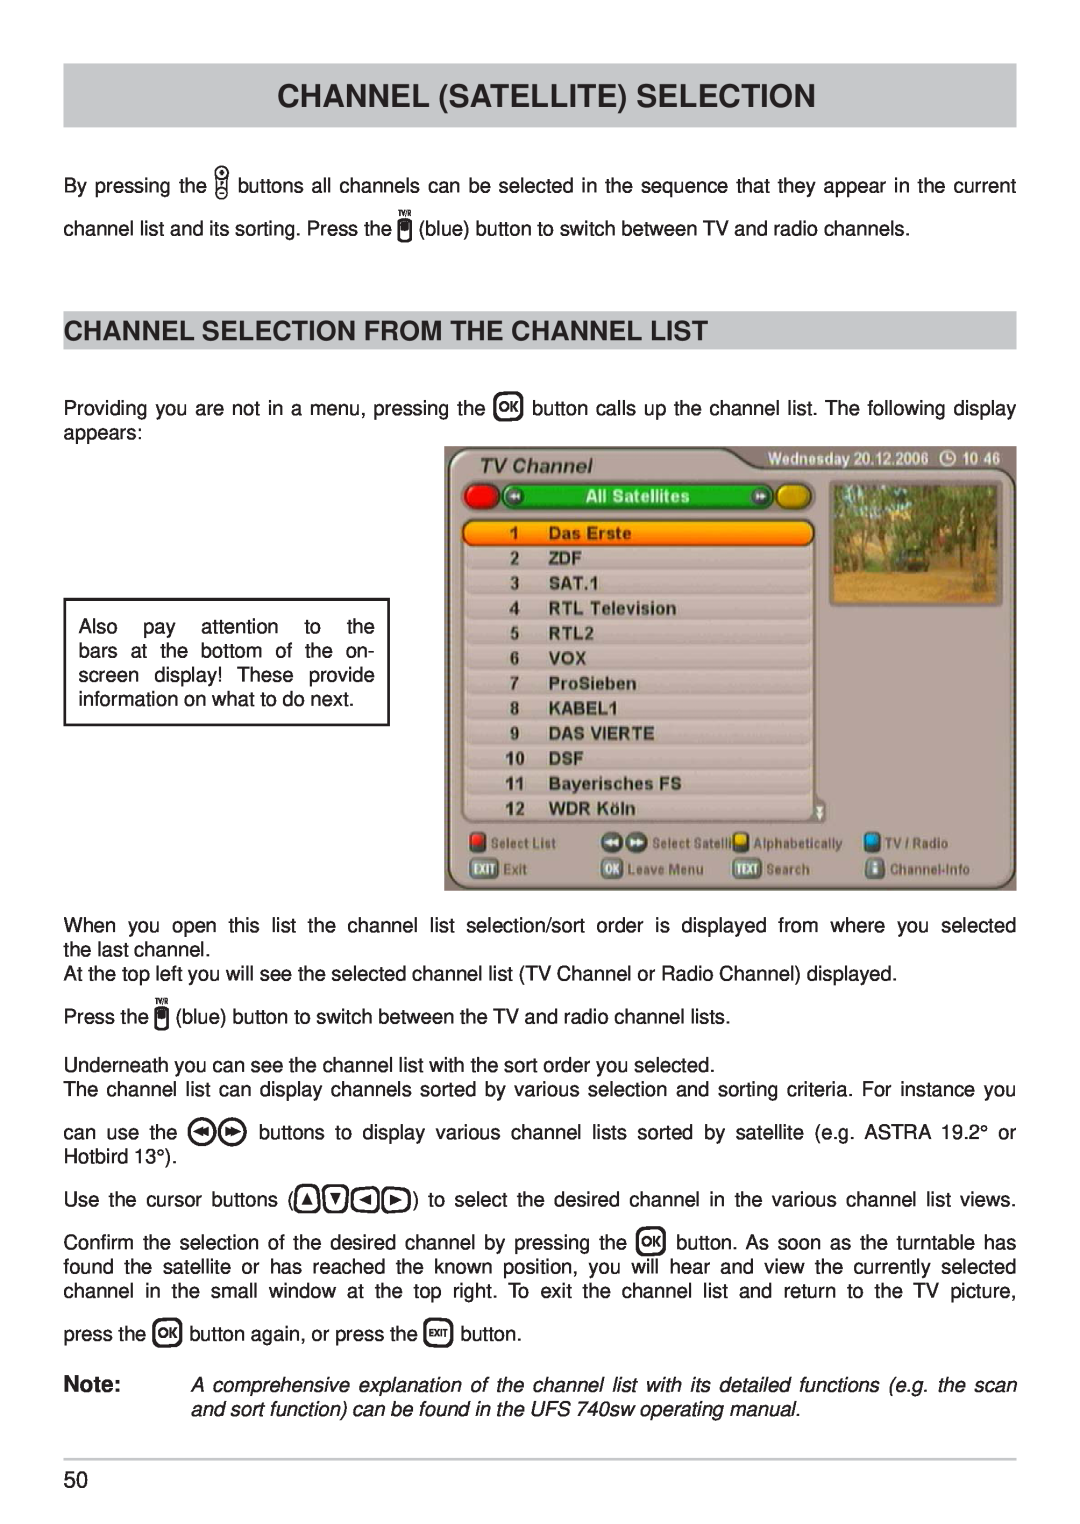 Kathrein CAP 700 manual Channel Satellite Selection, Channel Selection From The Channel List 